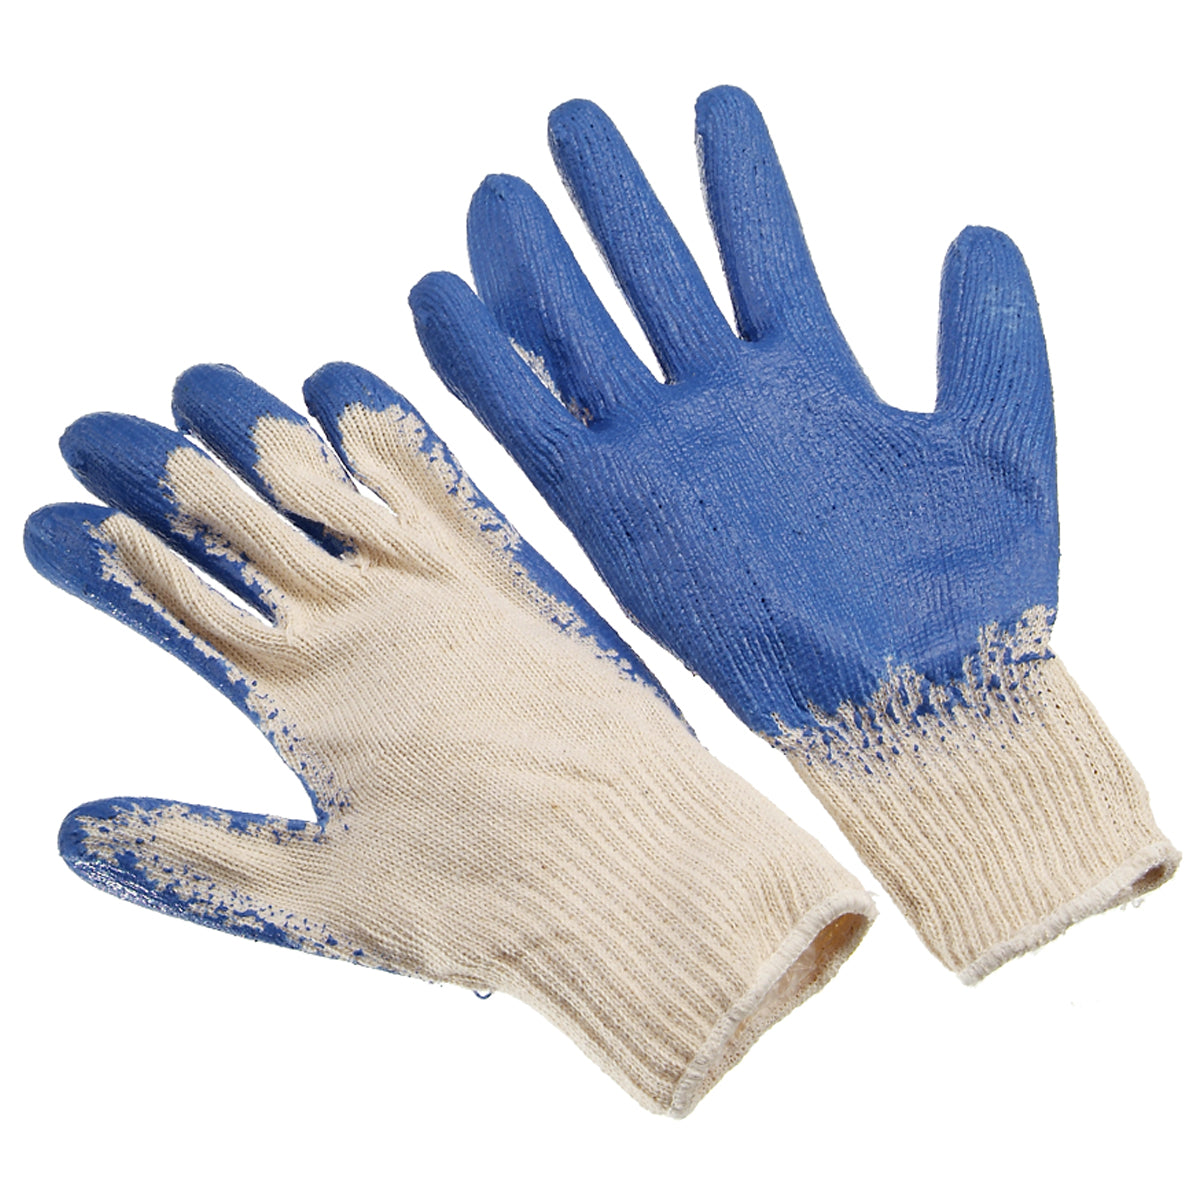 Seattle Glove Economy Blue Rubber Palm Coated, Large